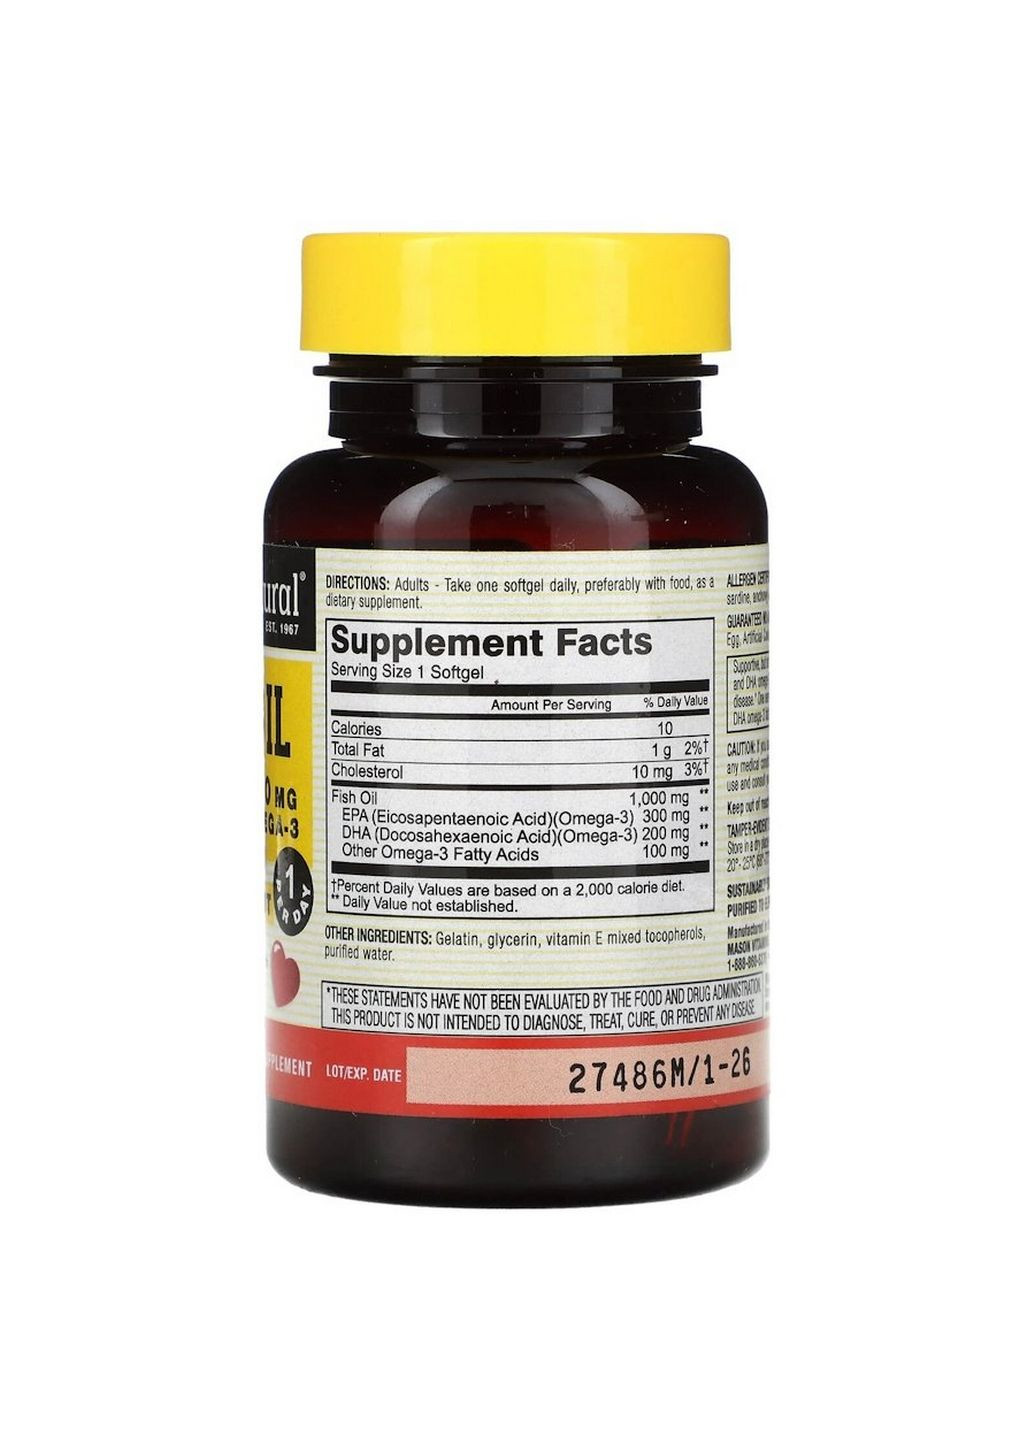 Жирные кислоты Fish Oil 1000 mg Omega 600 mg, 30 капсул Mason Natural (293481548)